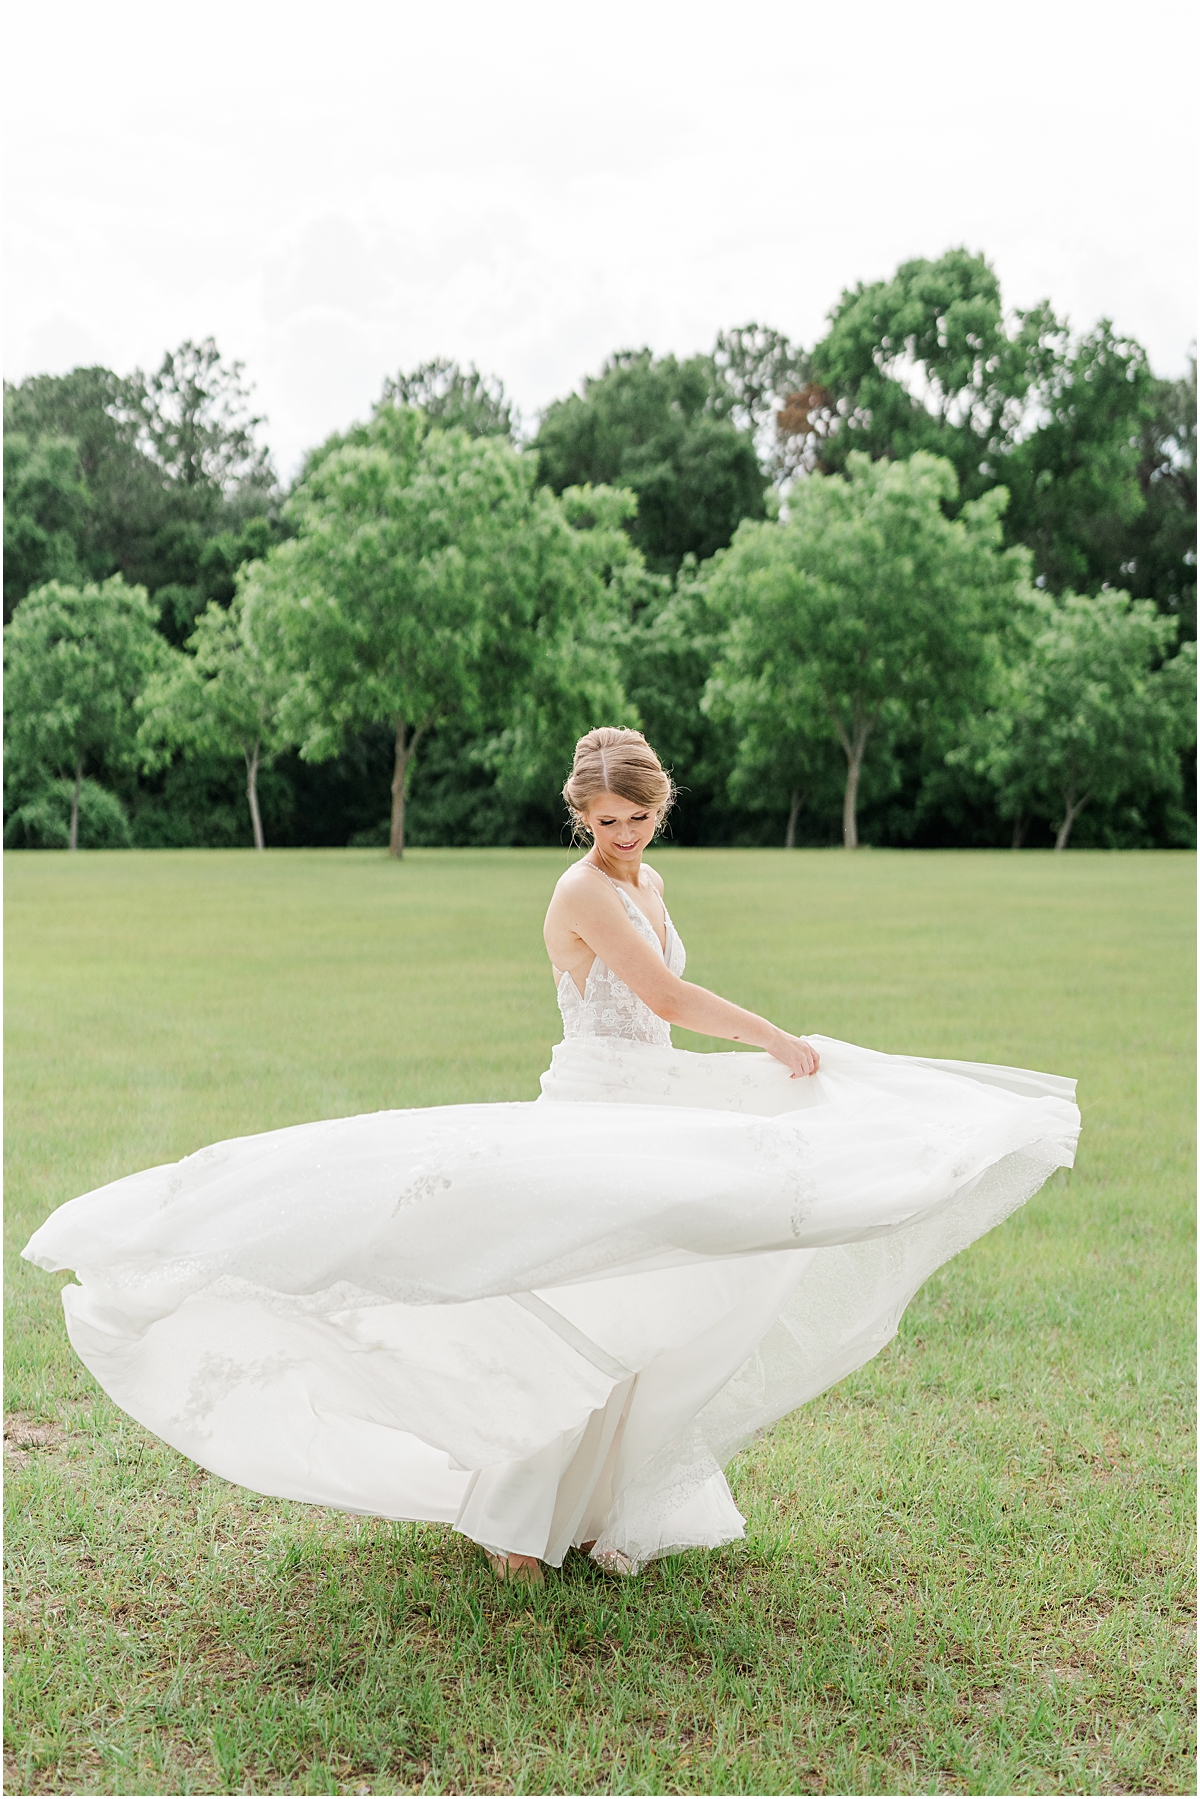 Brynn flaring her dress taken by a wedding photographer